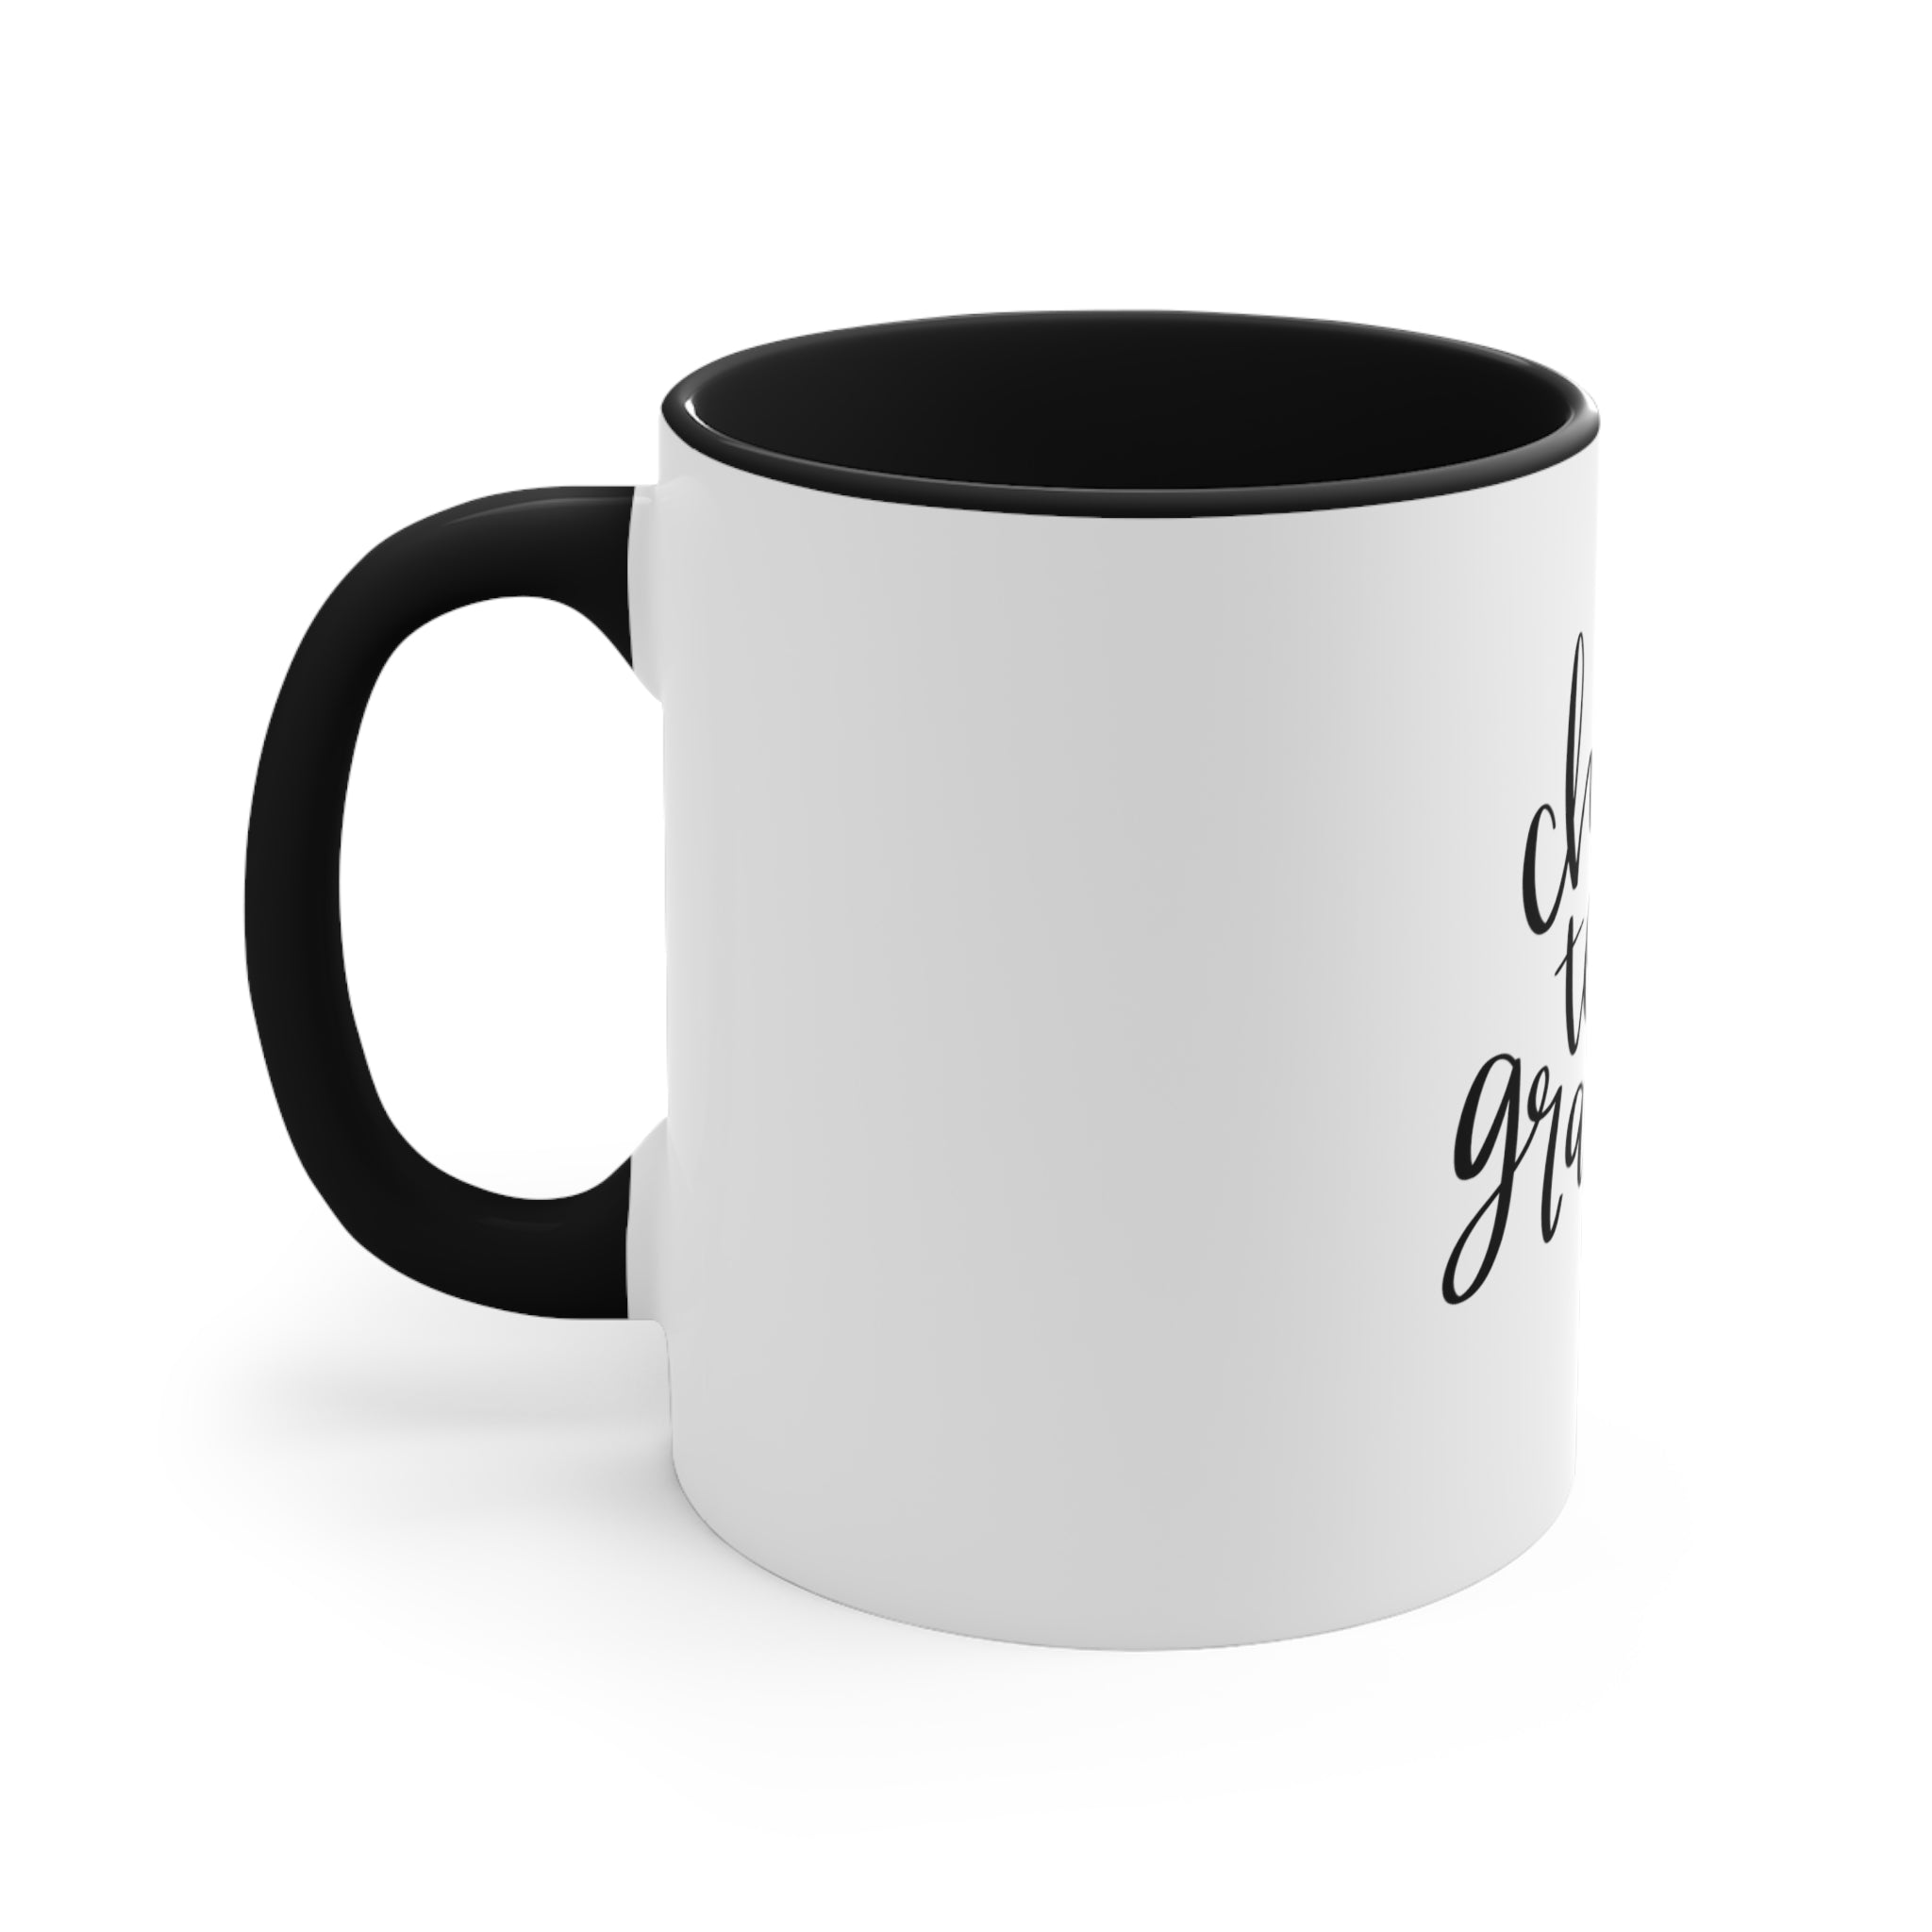 Choose To Be Grateful Accent Coffee Mug, 11oz